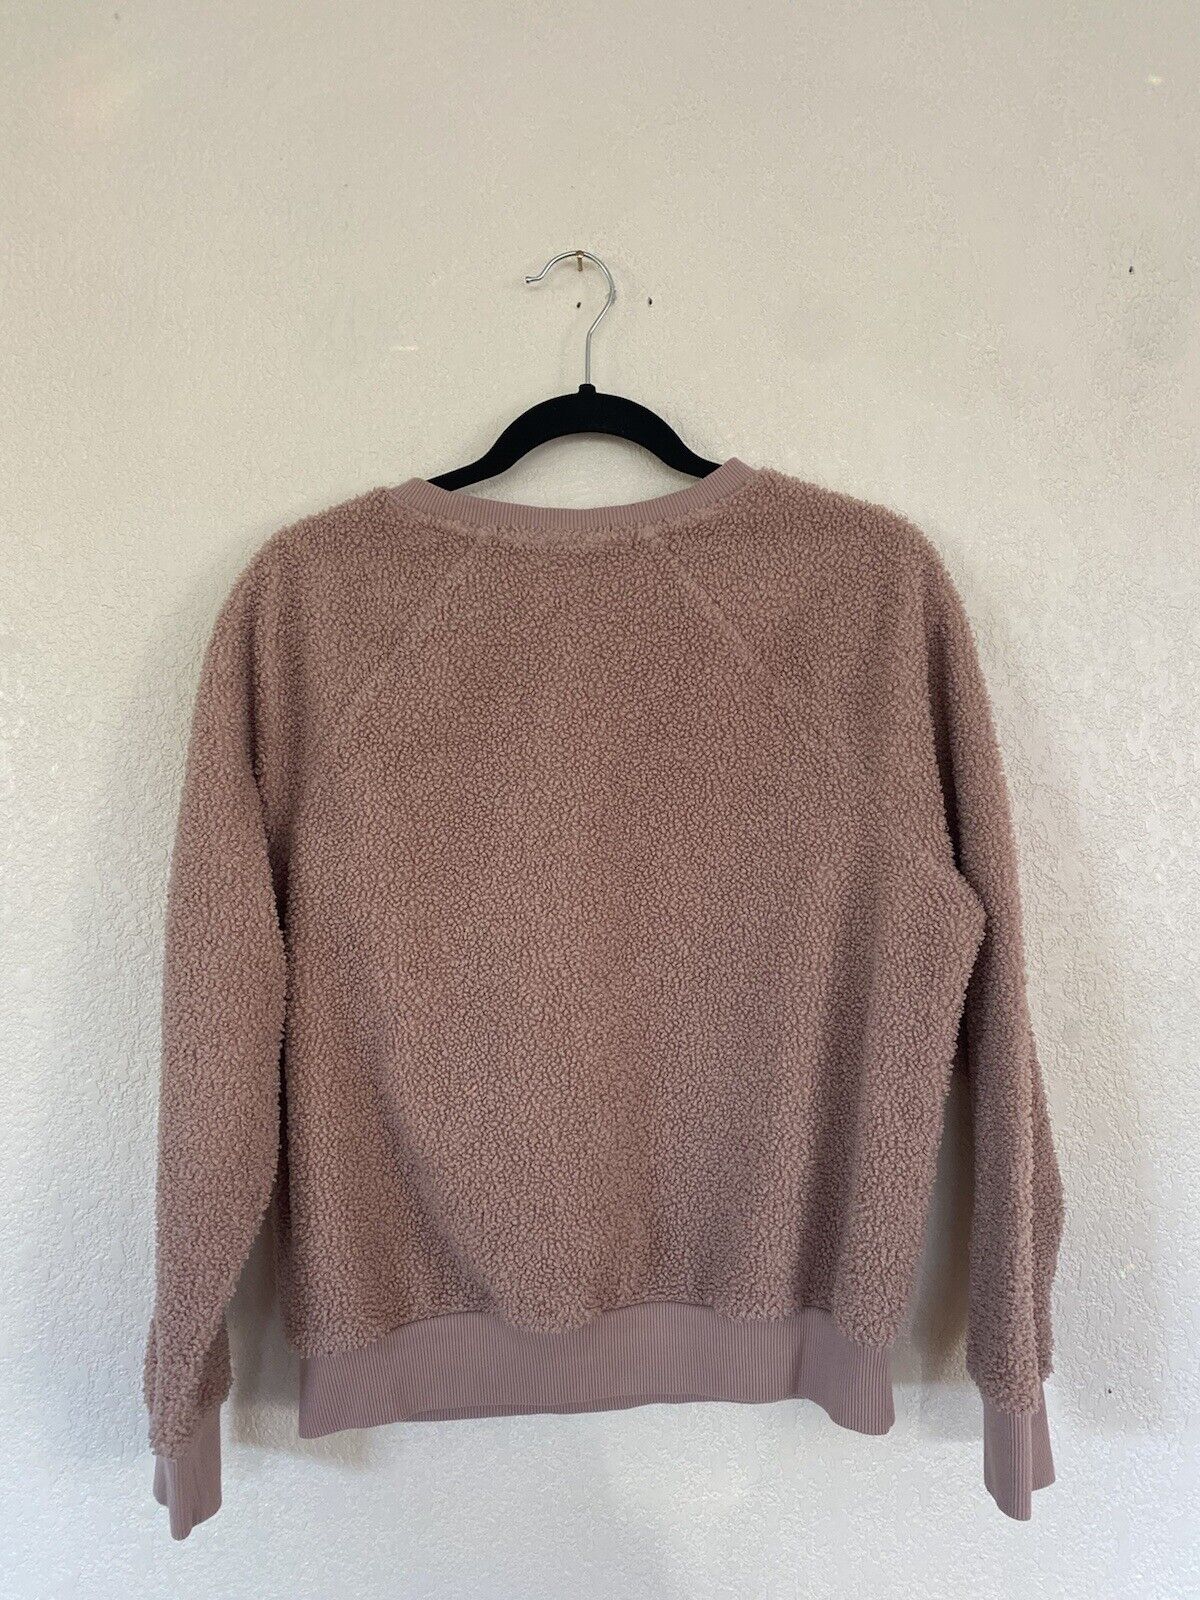 Fuzzy Pink Sweatshirt - Unbranded - Women's Medium # 2151